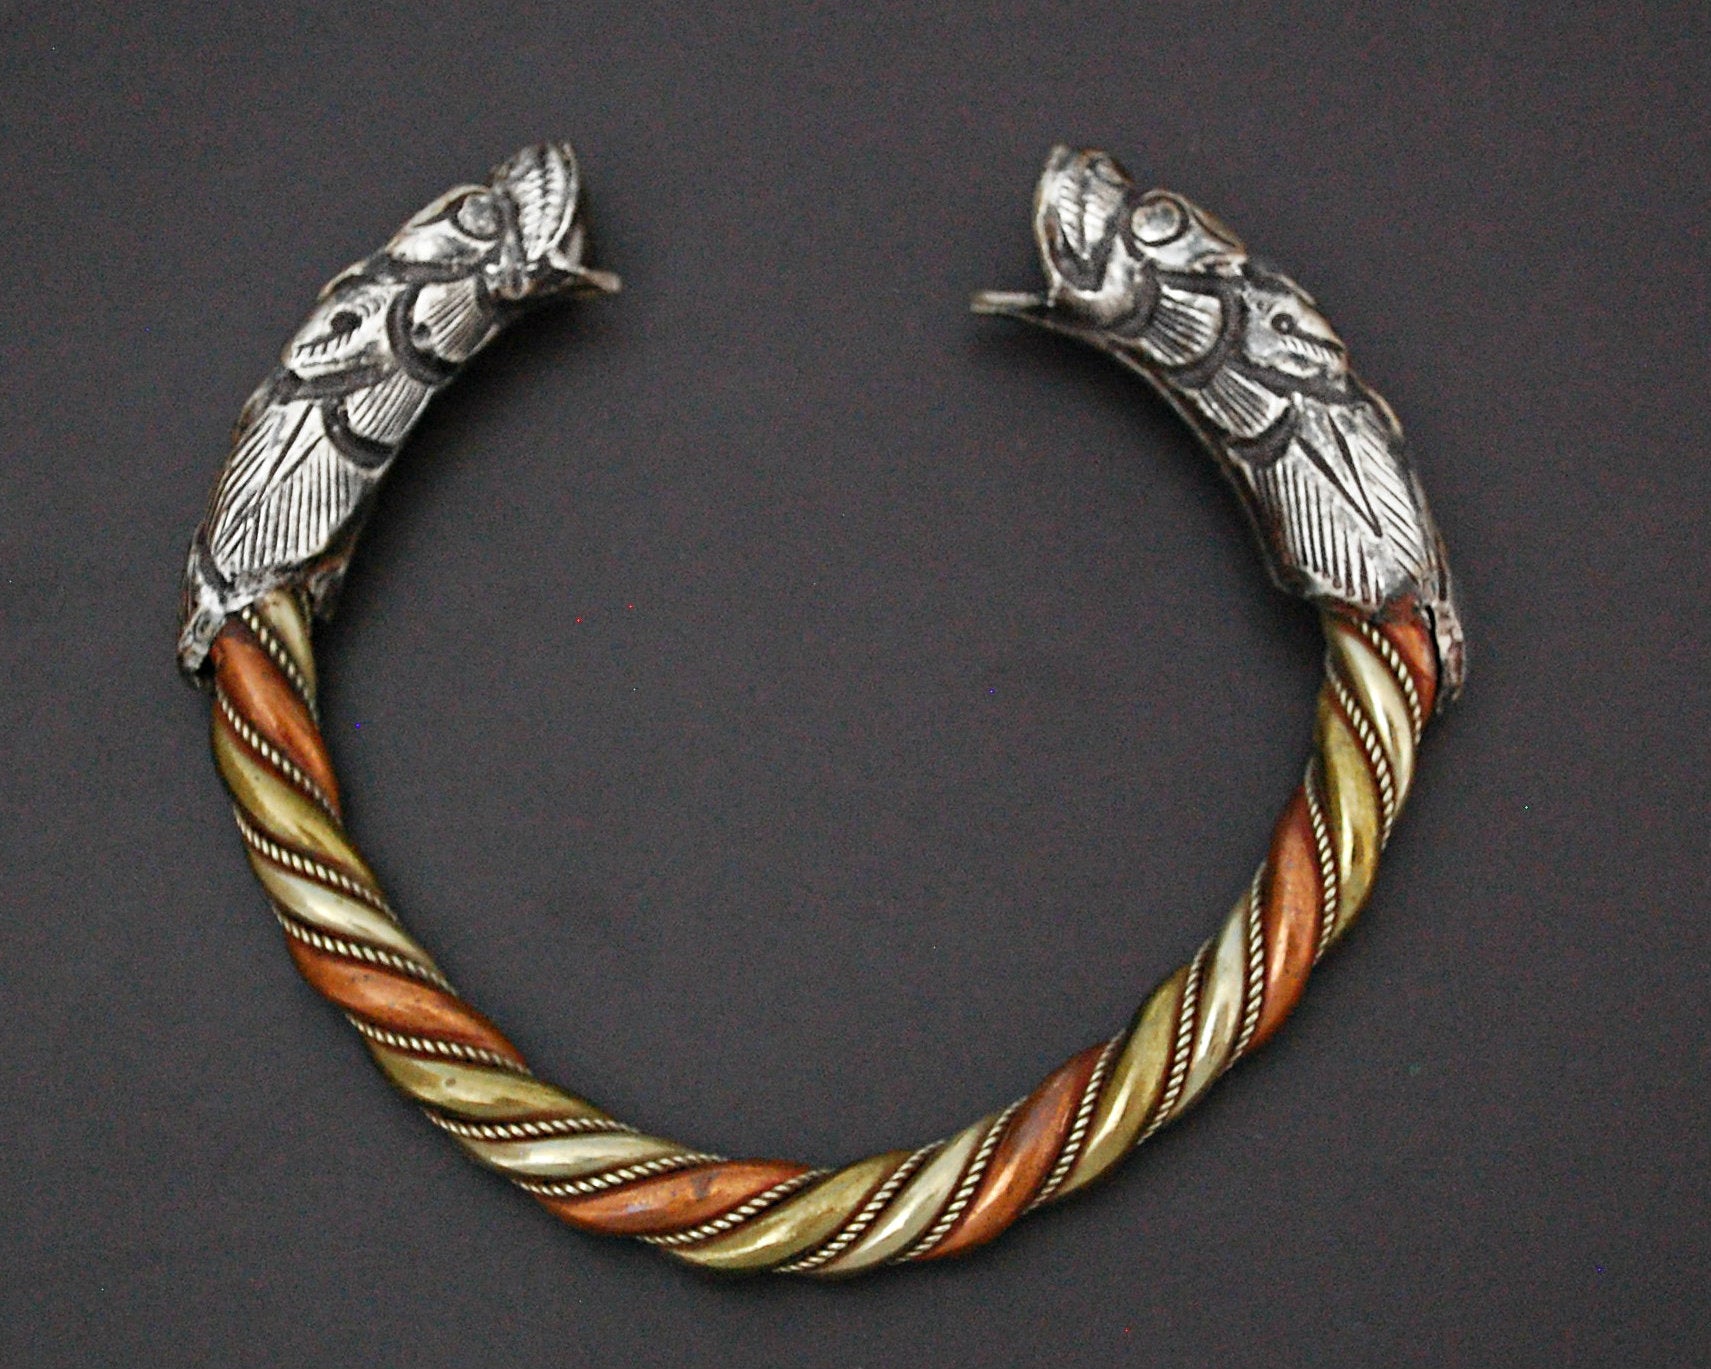 Nepali Twisted Dragon Bracelet - Three Colored